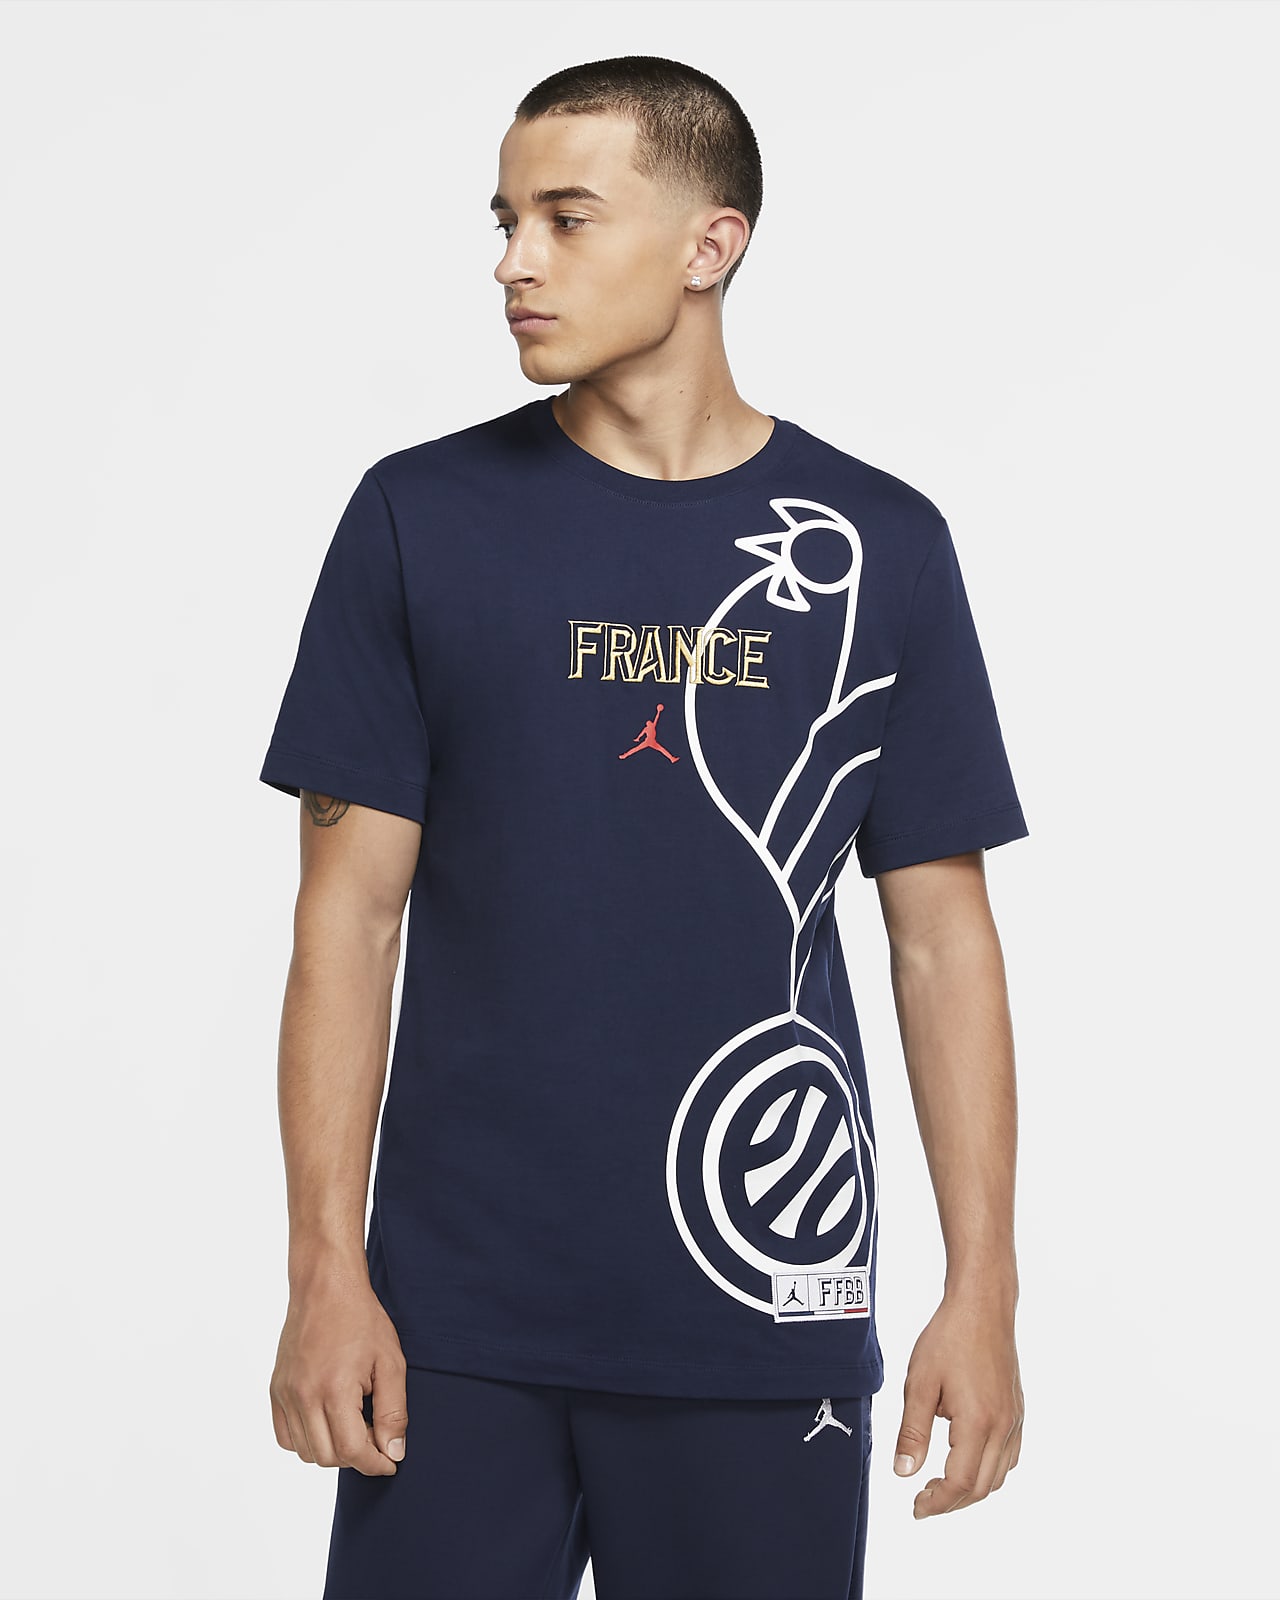 France Jordan FFBB Men's Logo T-Shirt